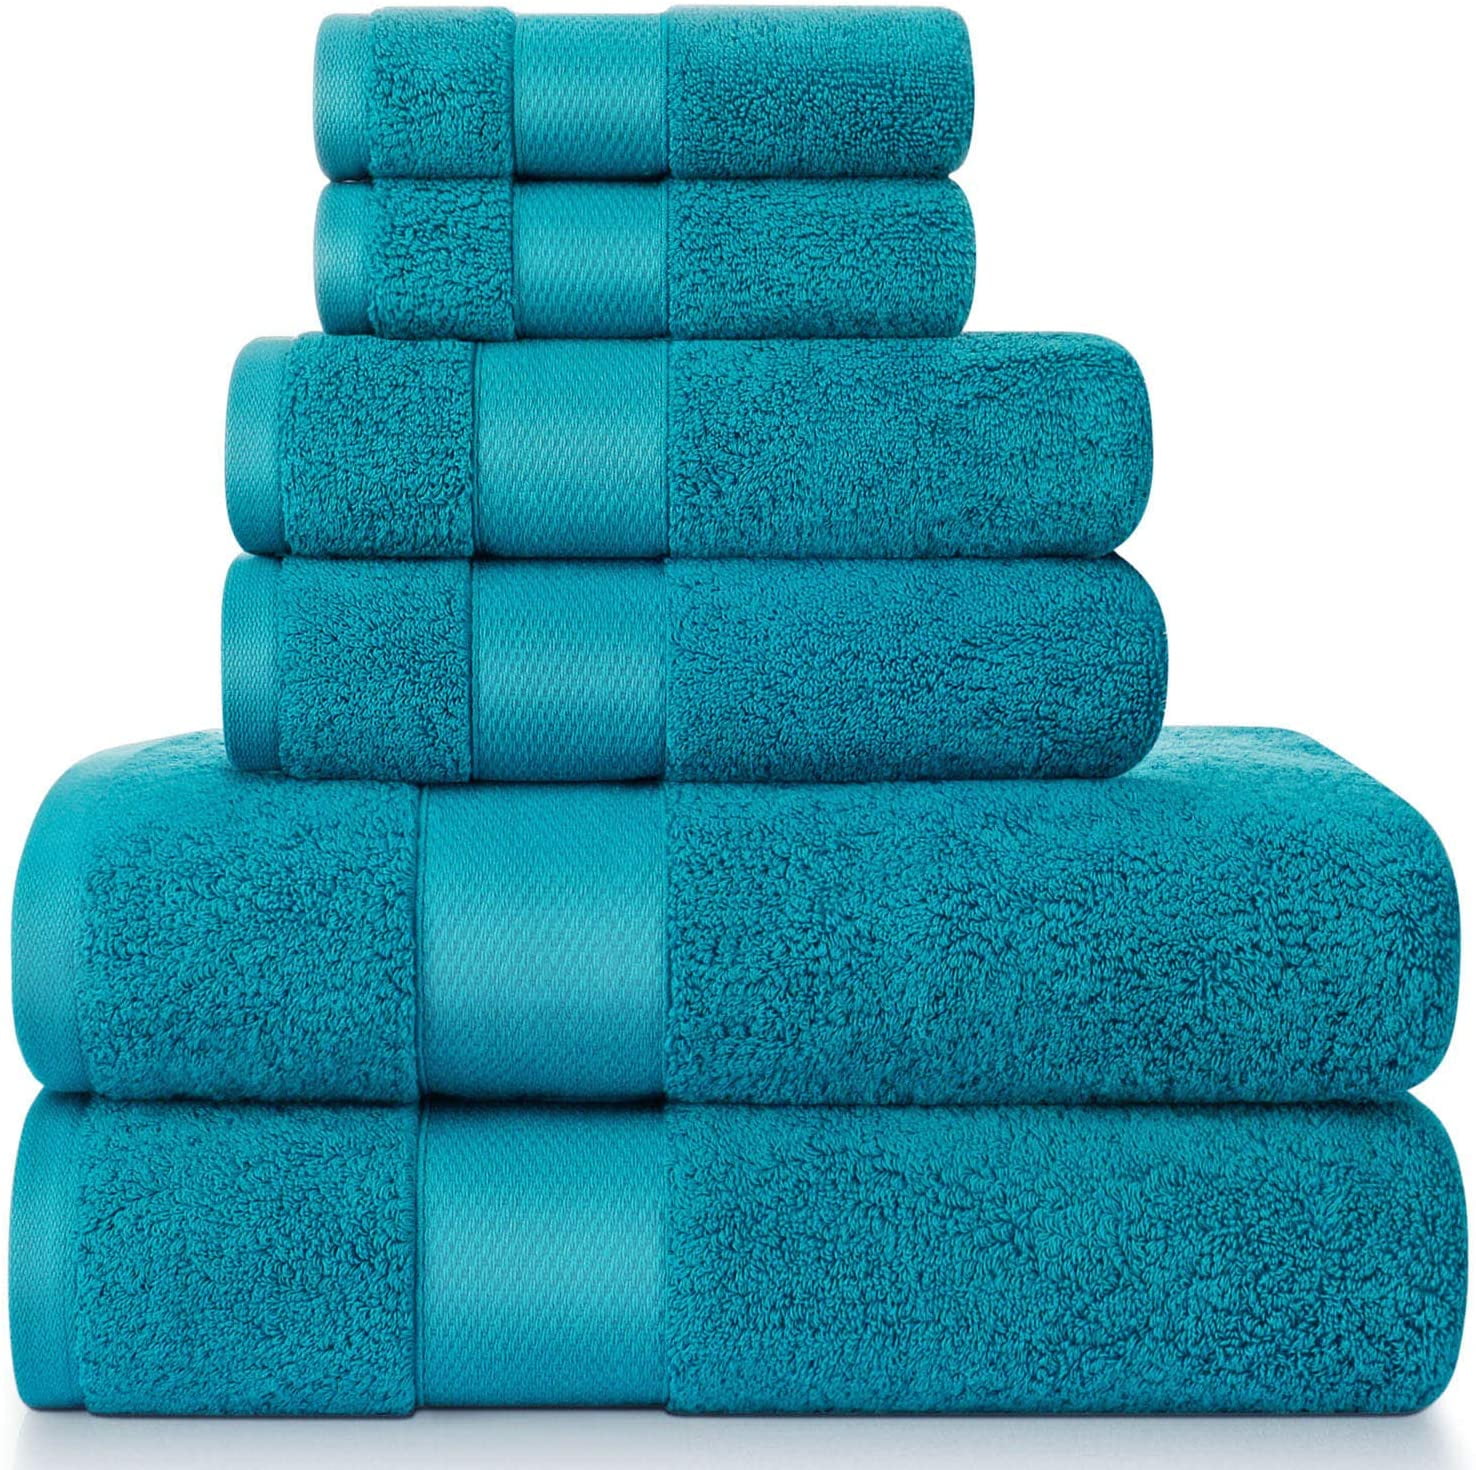 100% Cotton Towel Set Bath Sheet Hand Large Bale 600 GSM Bathroom & 6 Piece set 